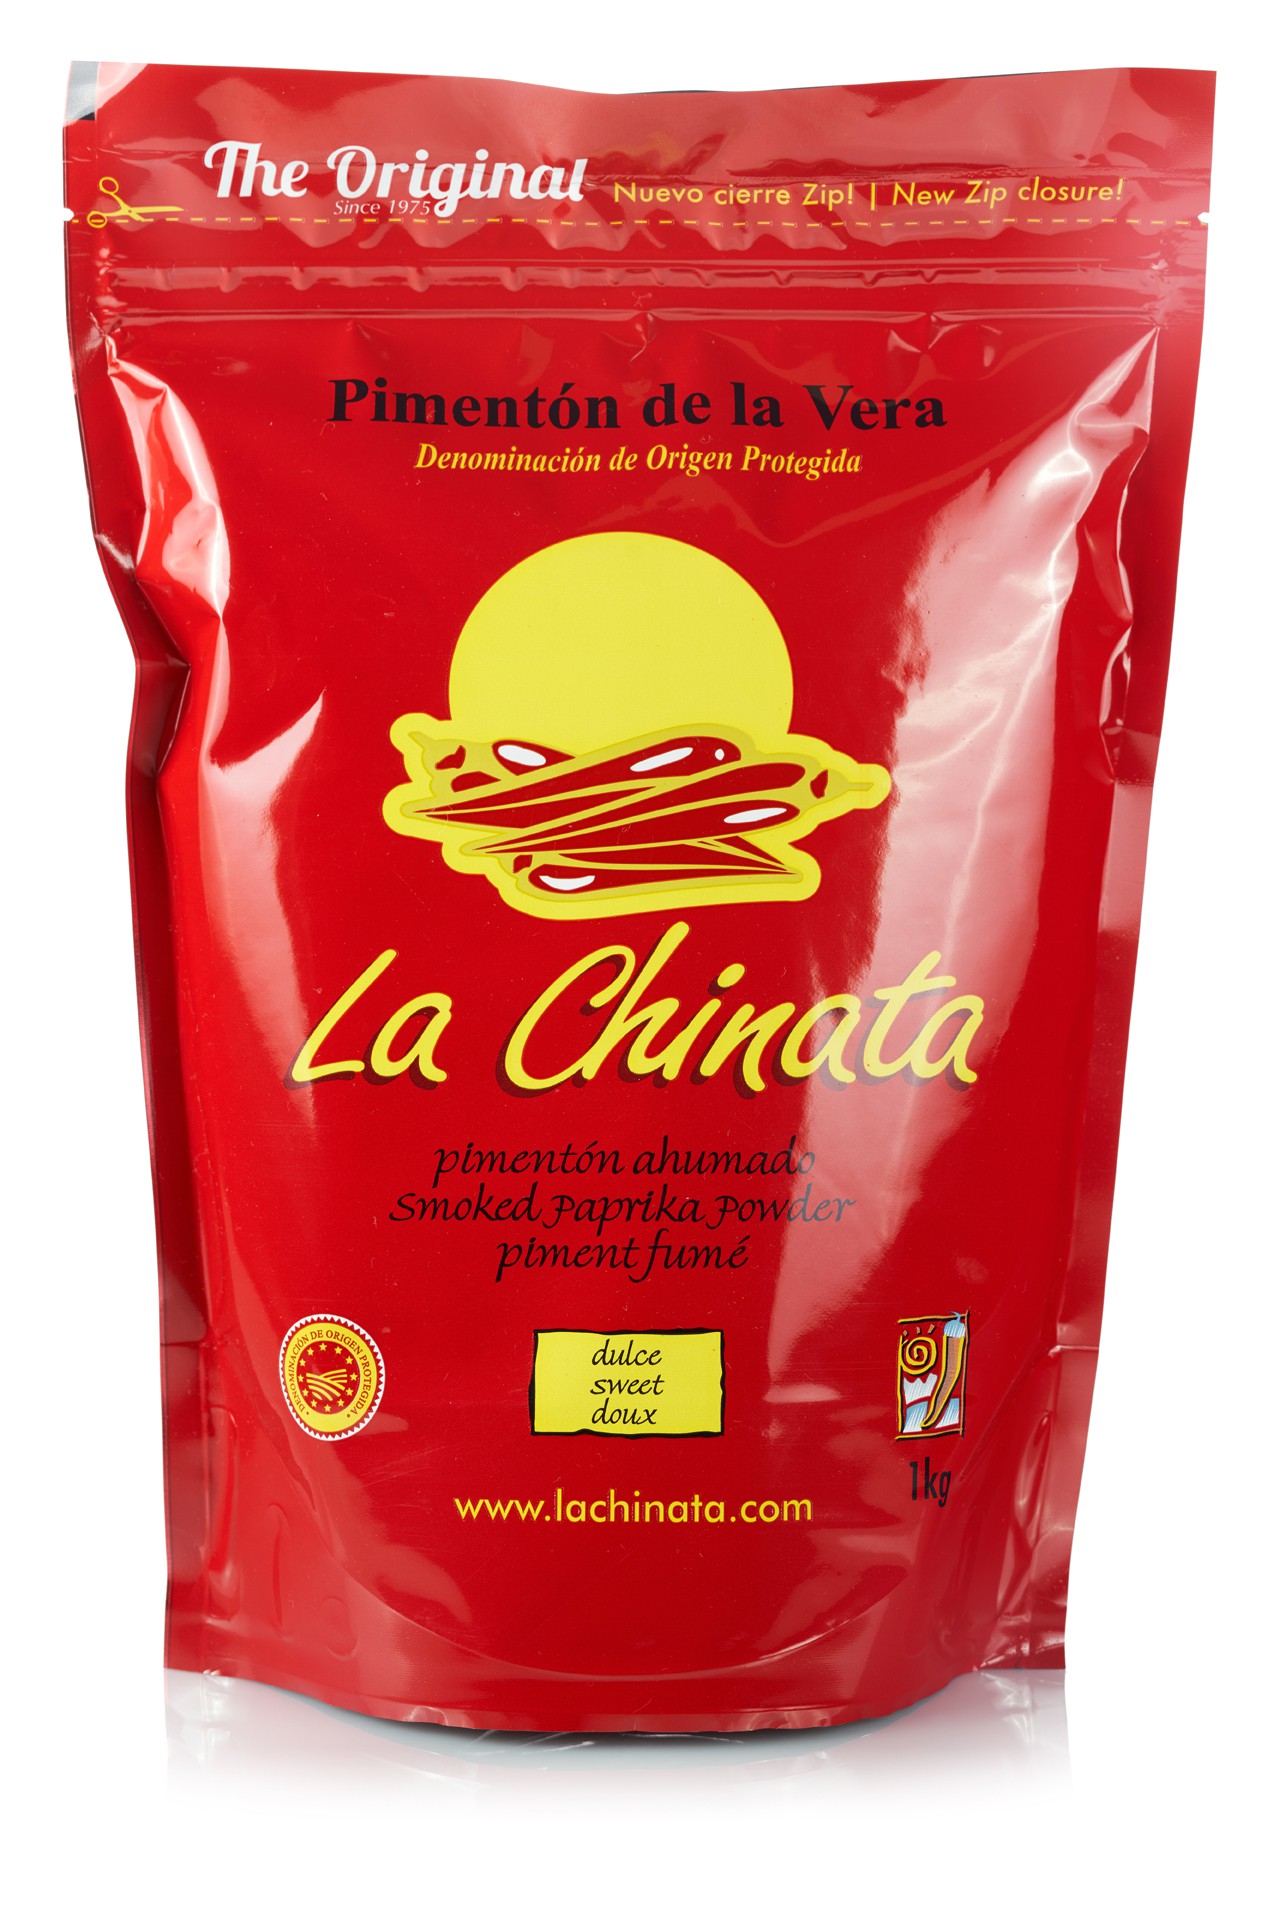 Sweet Smoked Paprika Powder "La Chinata" 1 kg Bag 